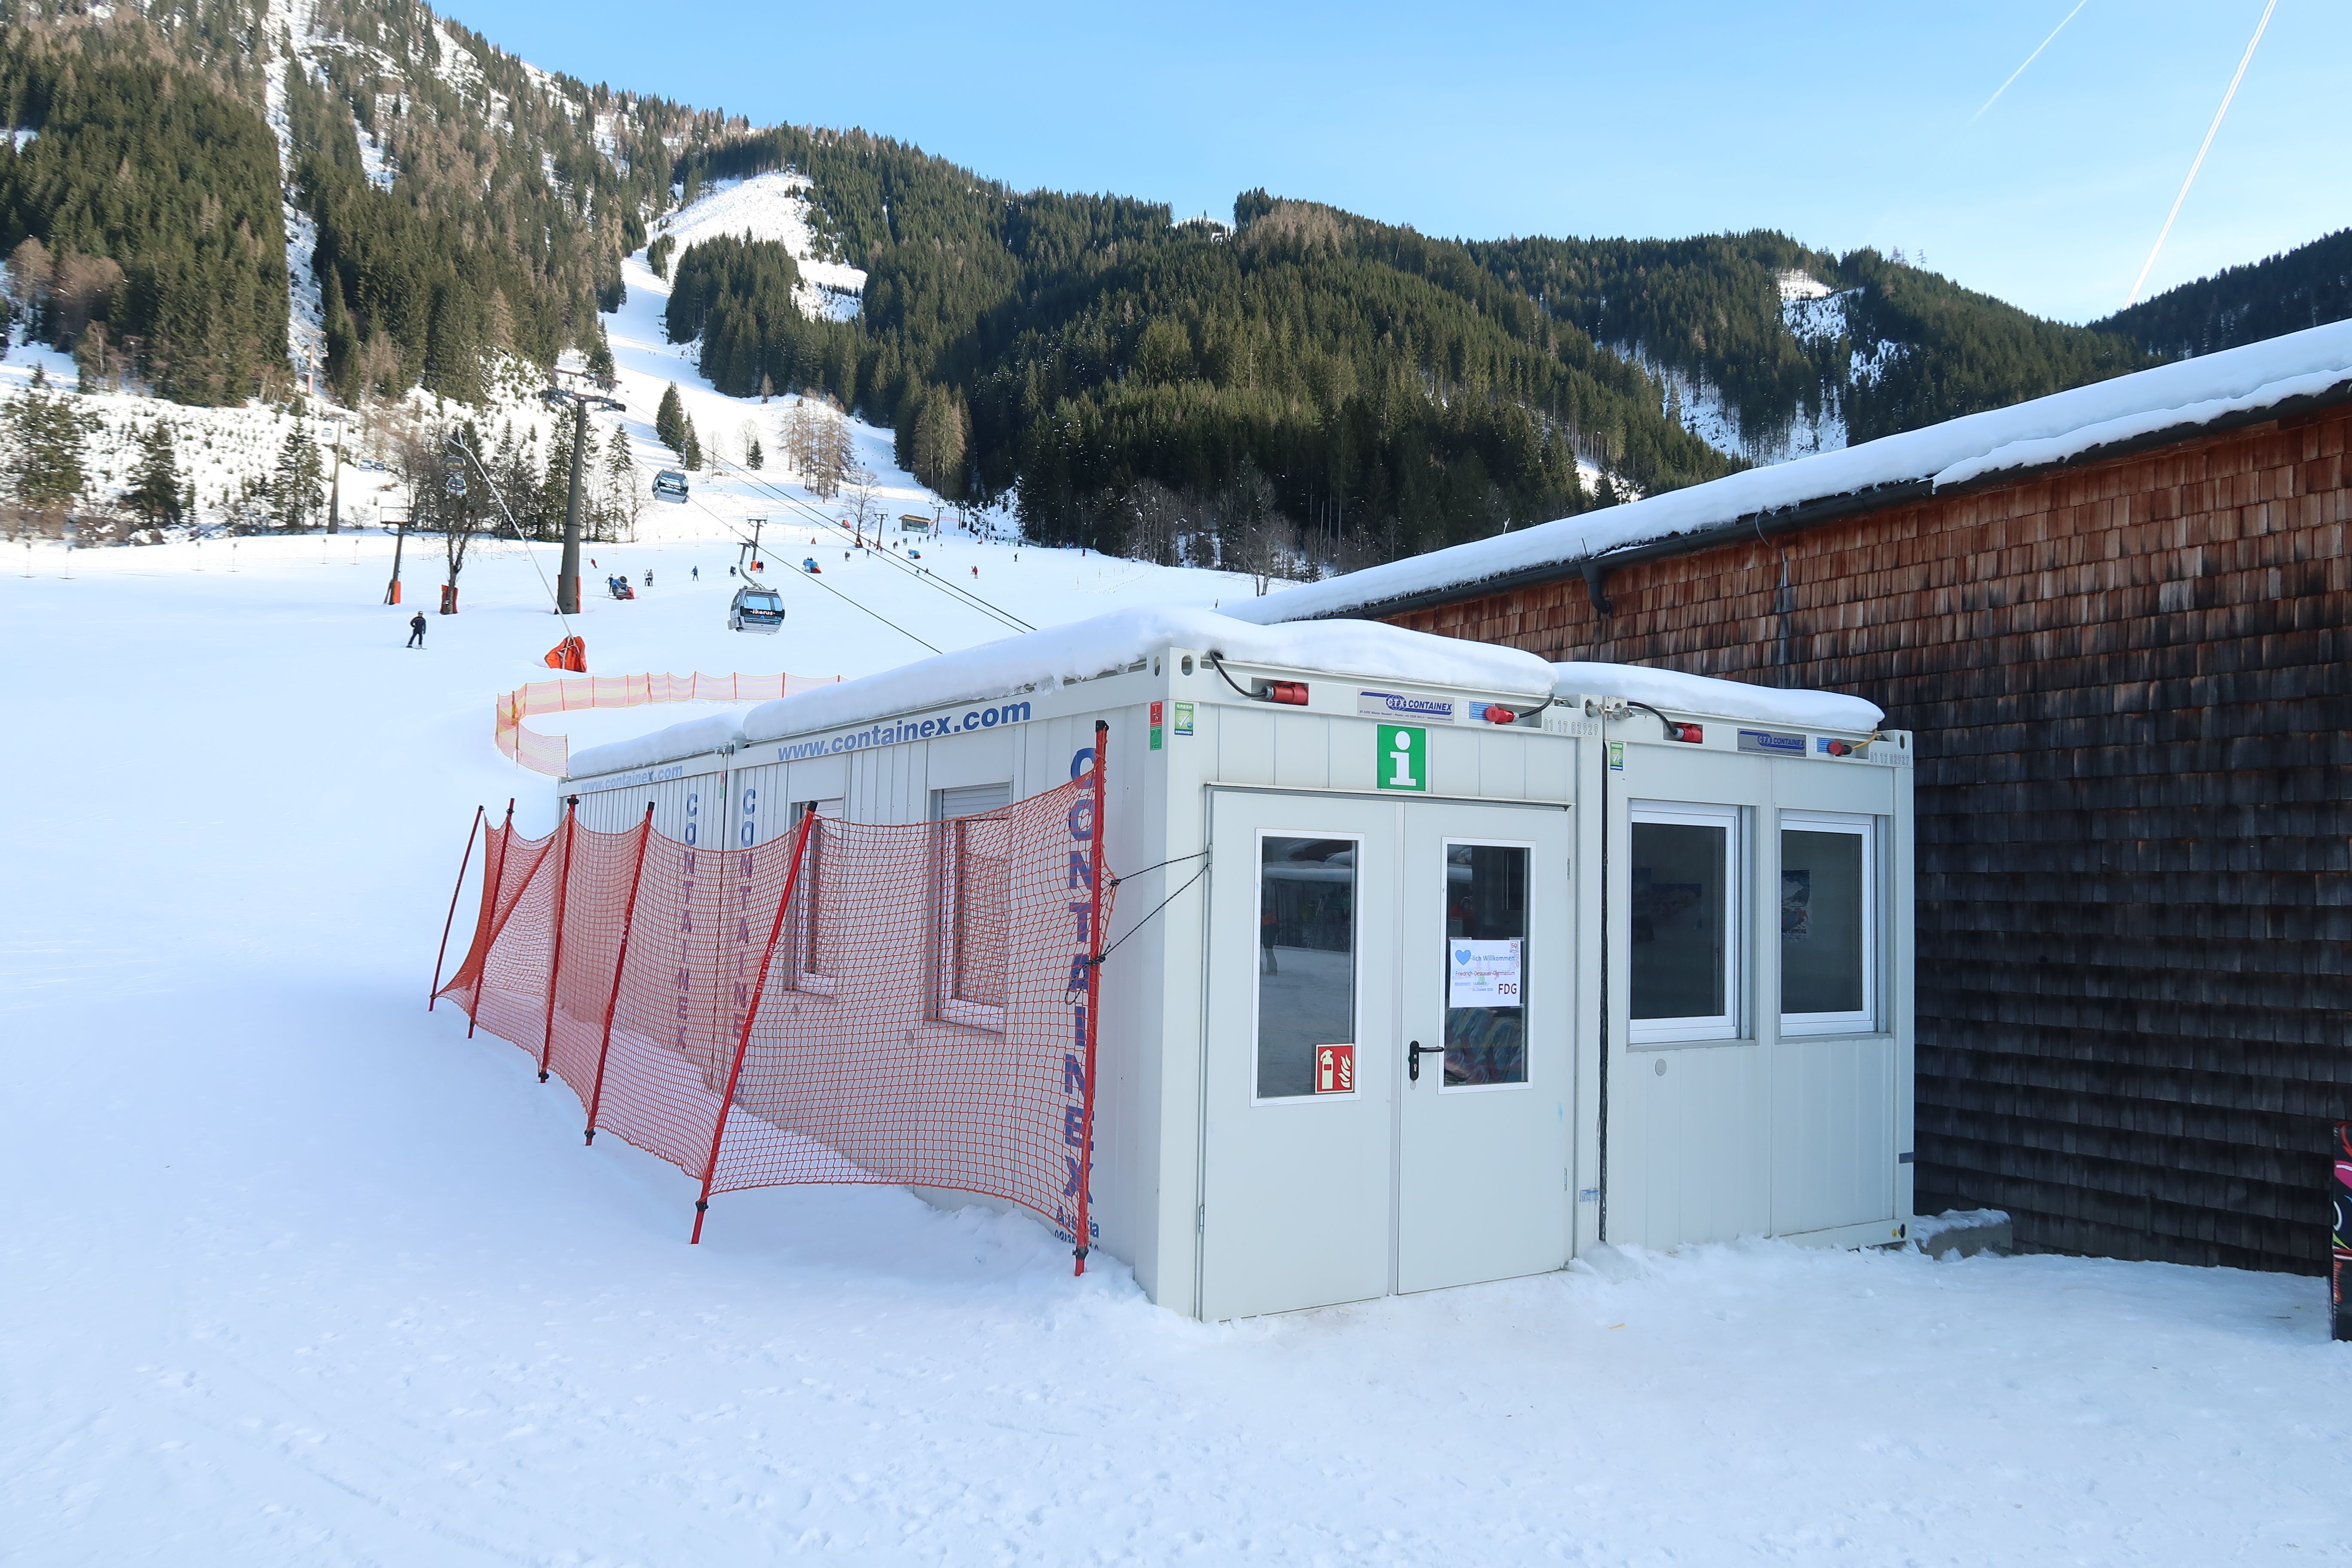 Impianto di prefabbricati modulari come sala ricreativa nei pressi di una pista da sci, a Werfenweng (Austria)